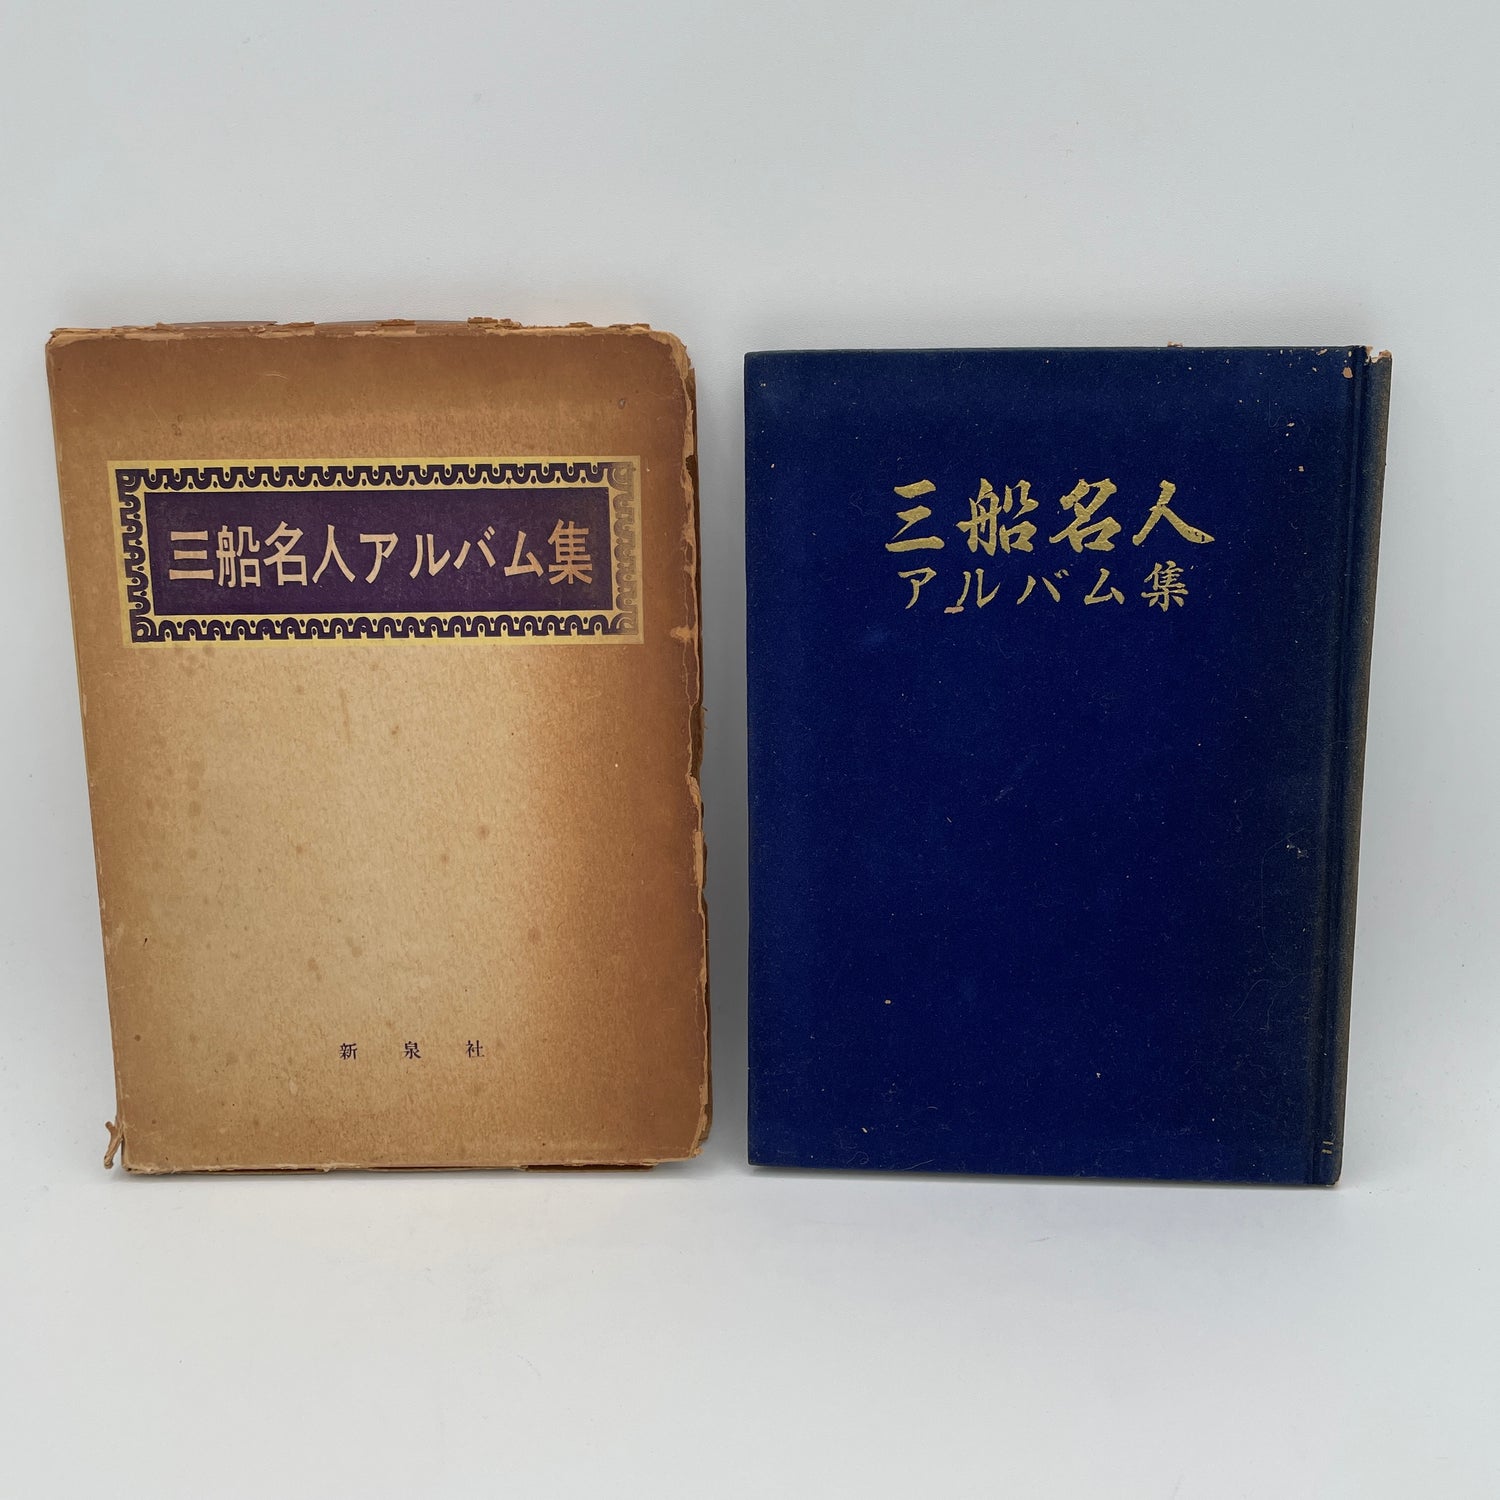 Kyuzo Mifune Photo Album Collection Book (Preowned)